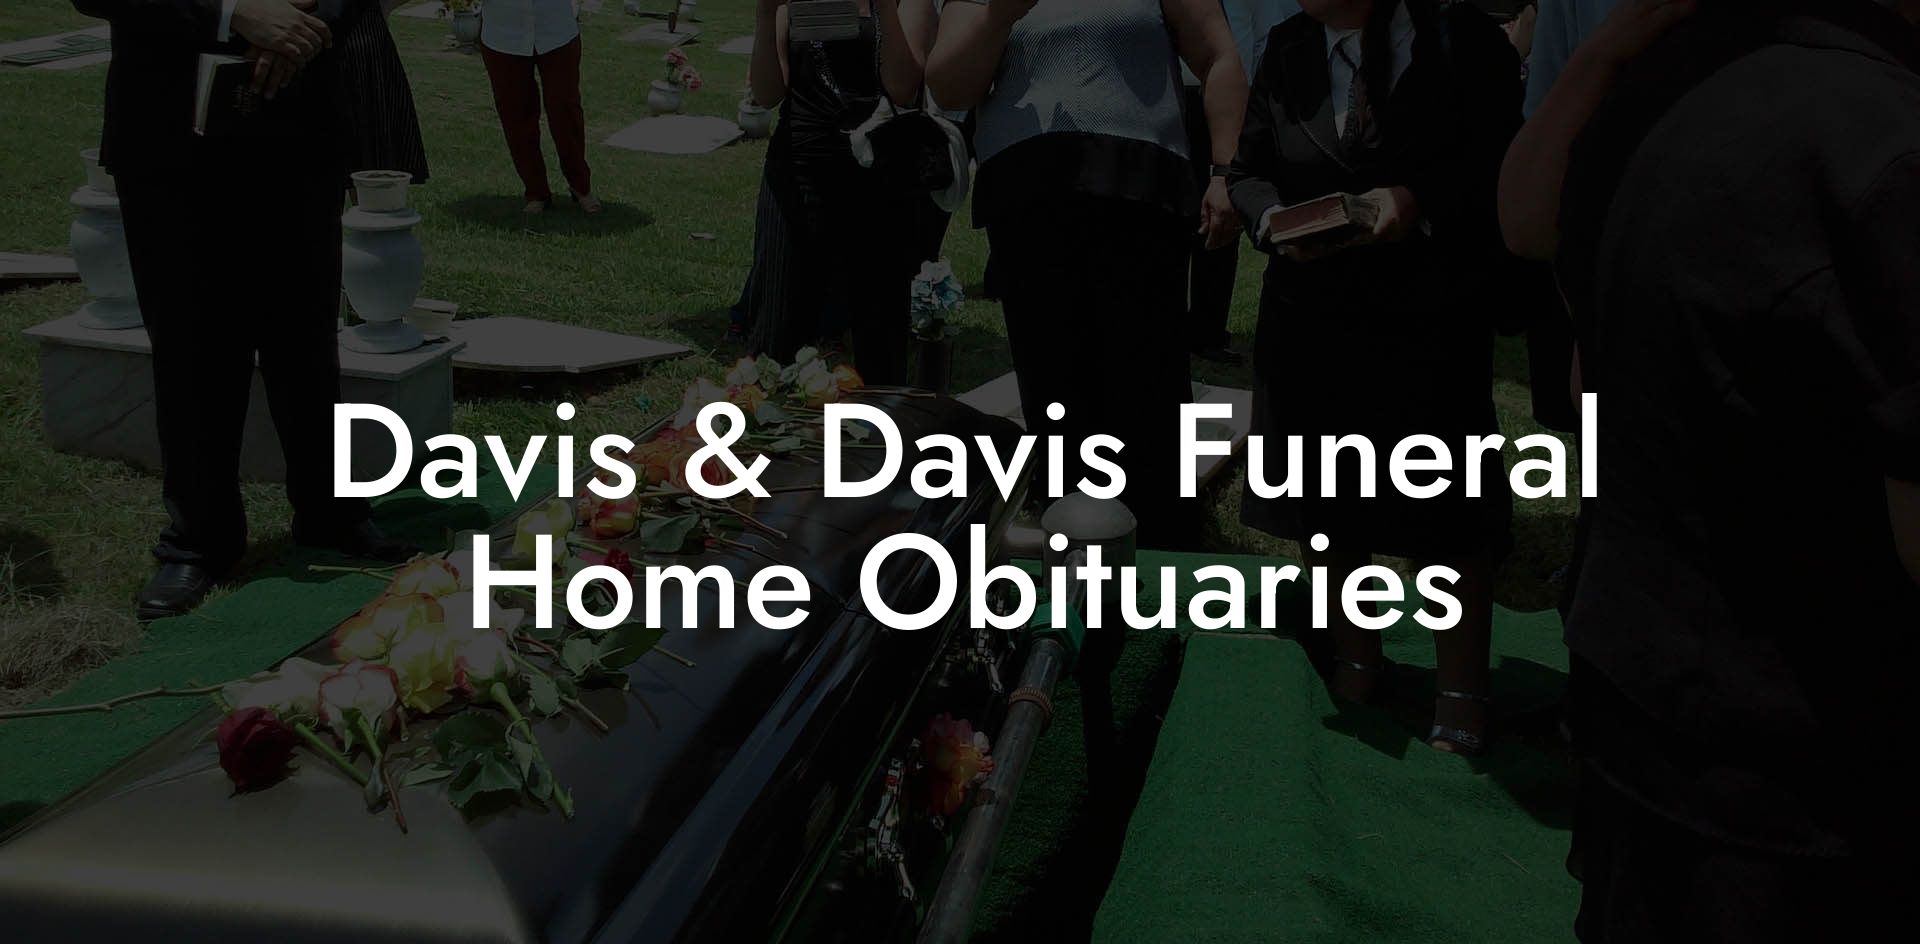 Davis & Davis Funeral Home Obituaries